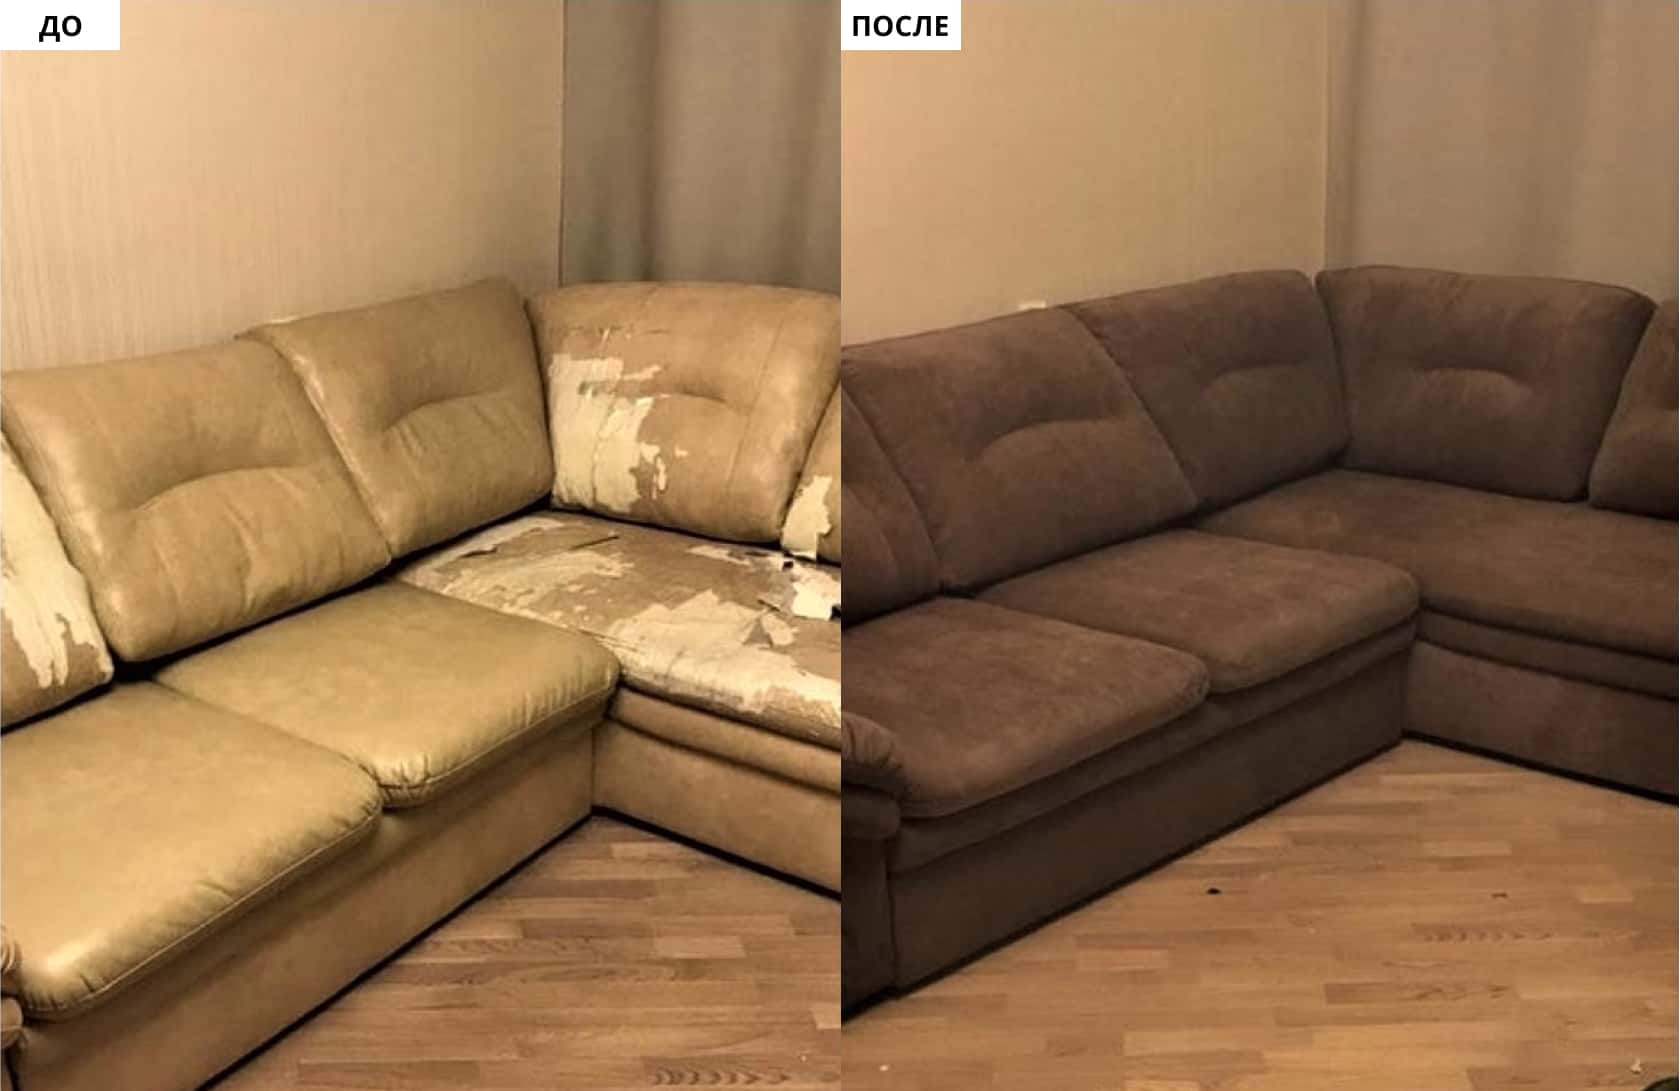 Ремонт мягкой мебели спб. Обивка дивана до и после. Диван после перетяжки. Угловой диван до и после. Обшивка мягкой мебели до и после.